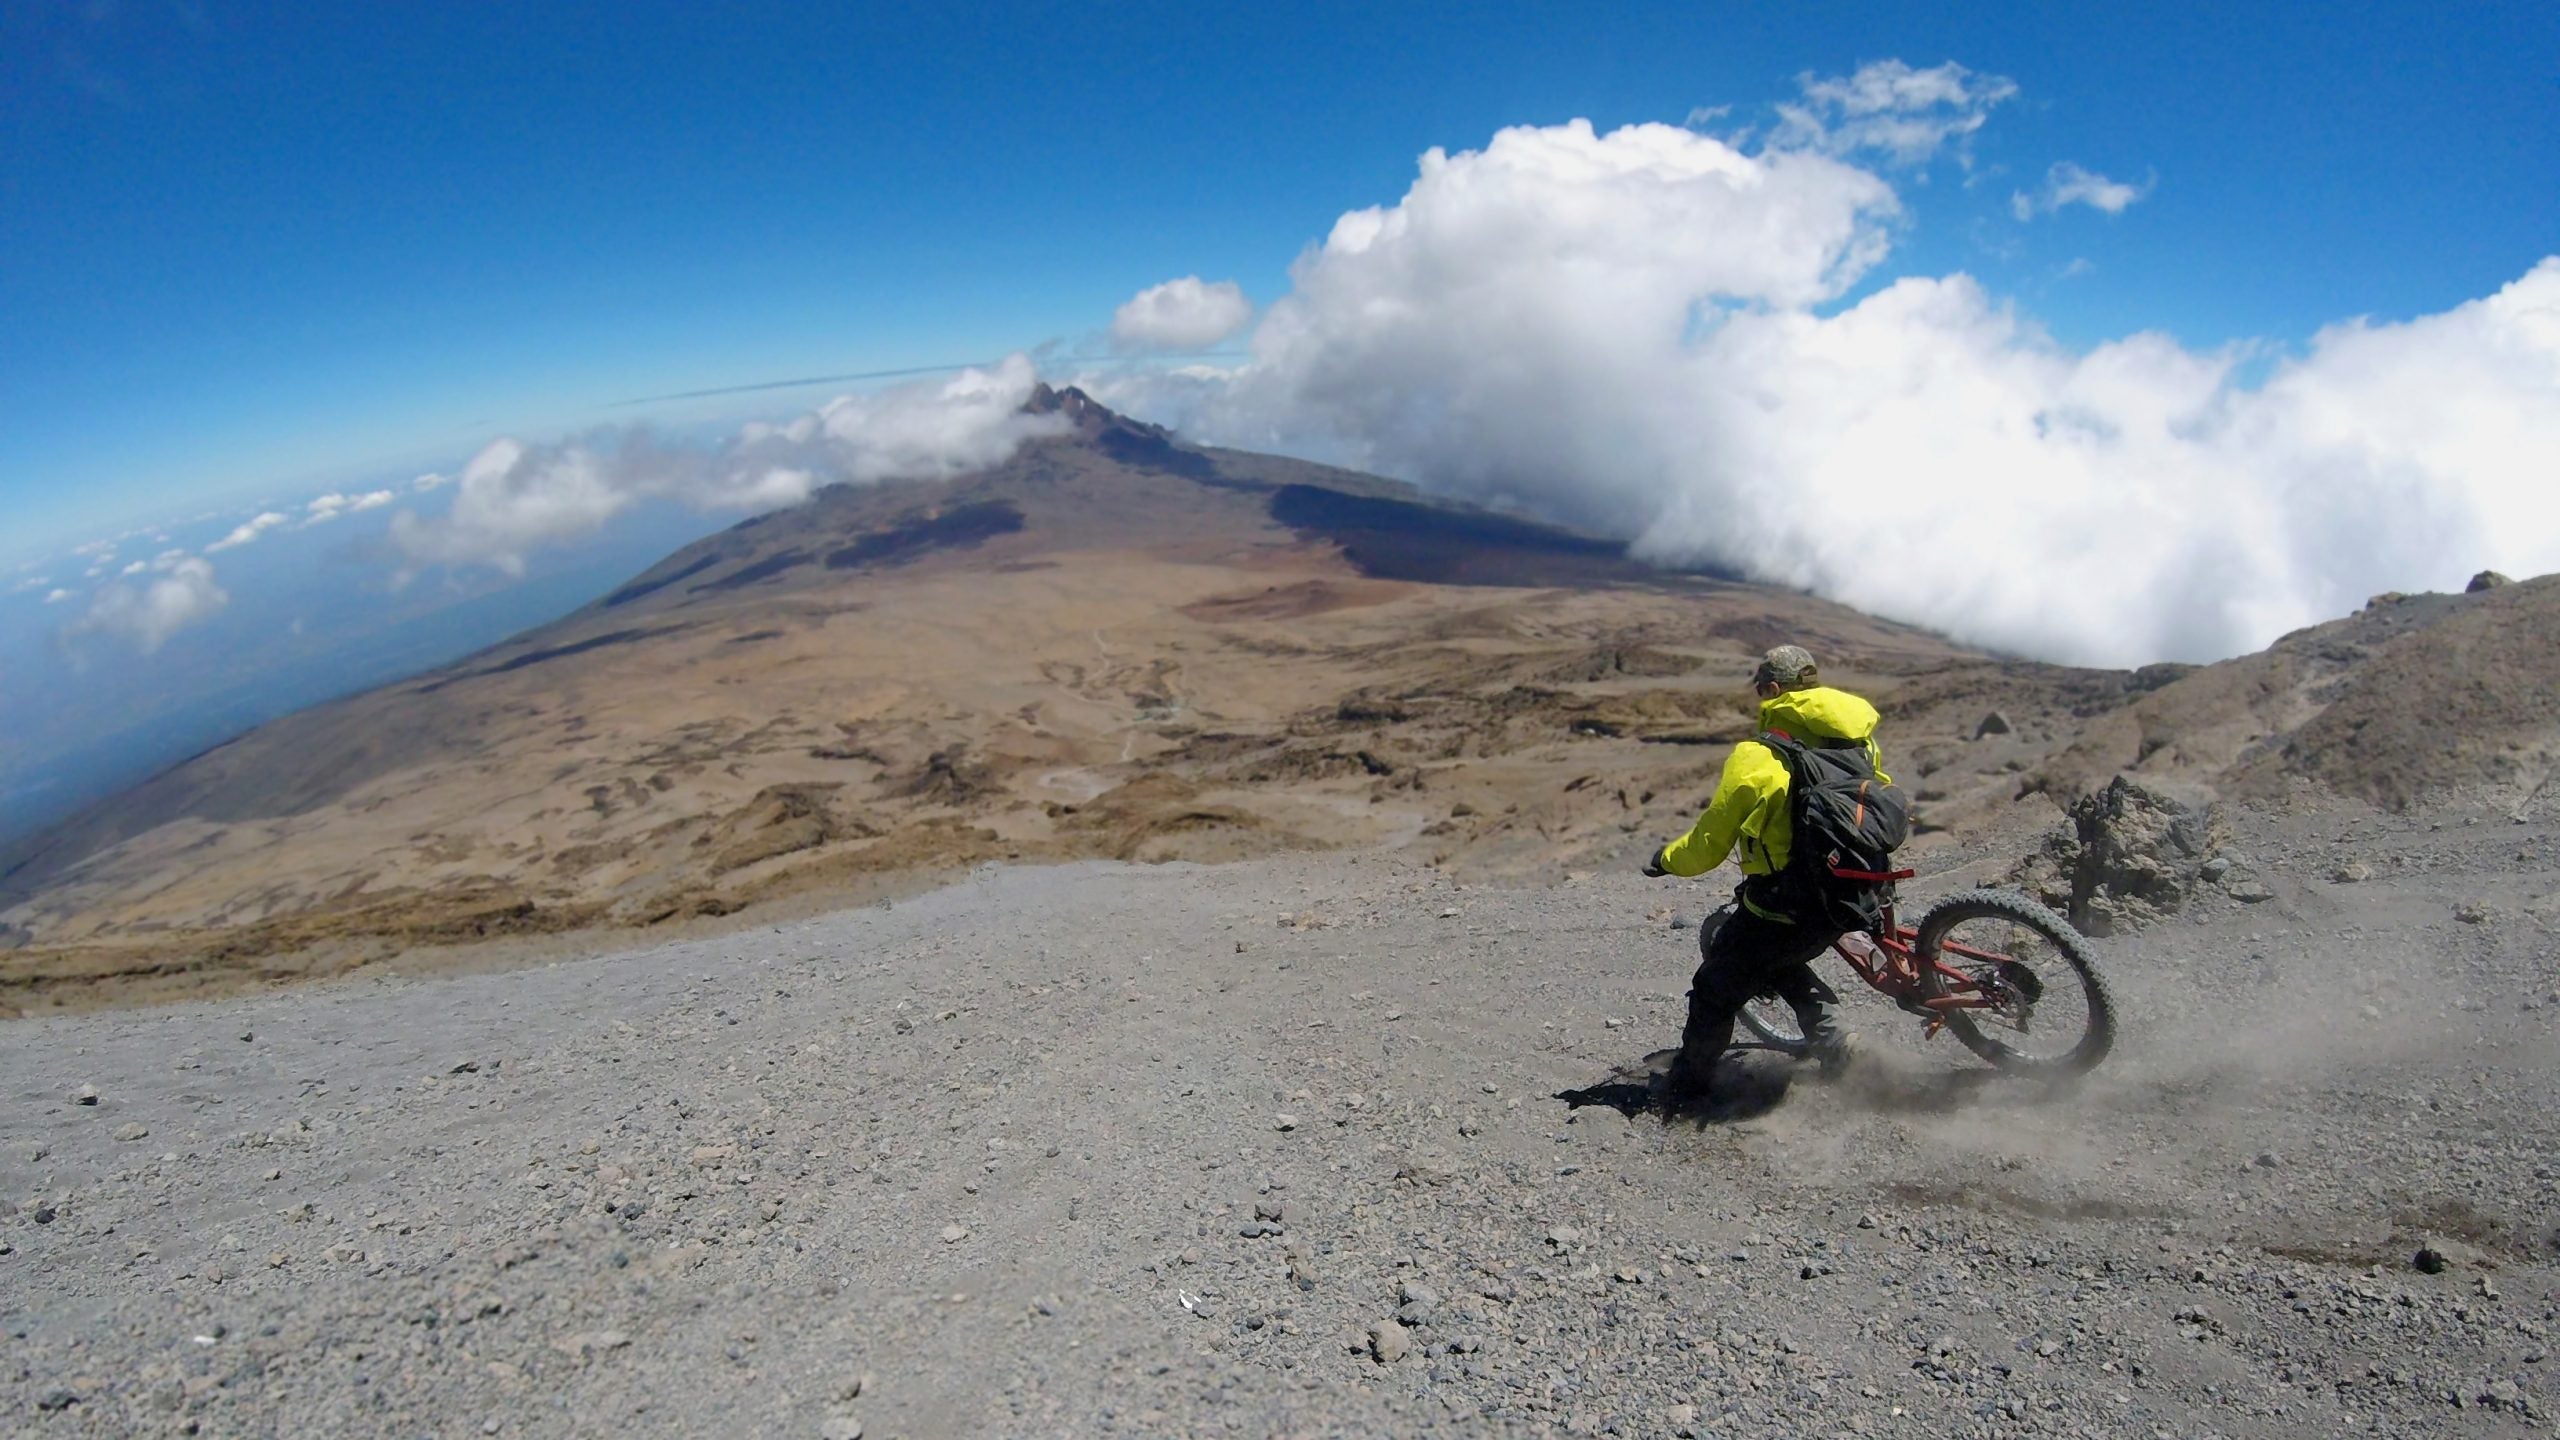 Summiting Mount Kilimanjaro on a Bike Is as Hard as It Looks